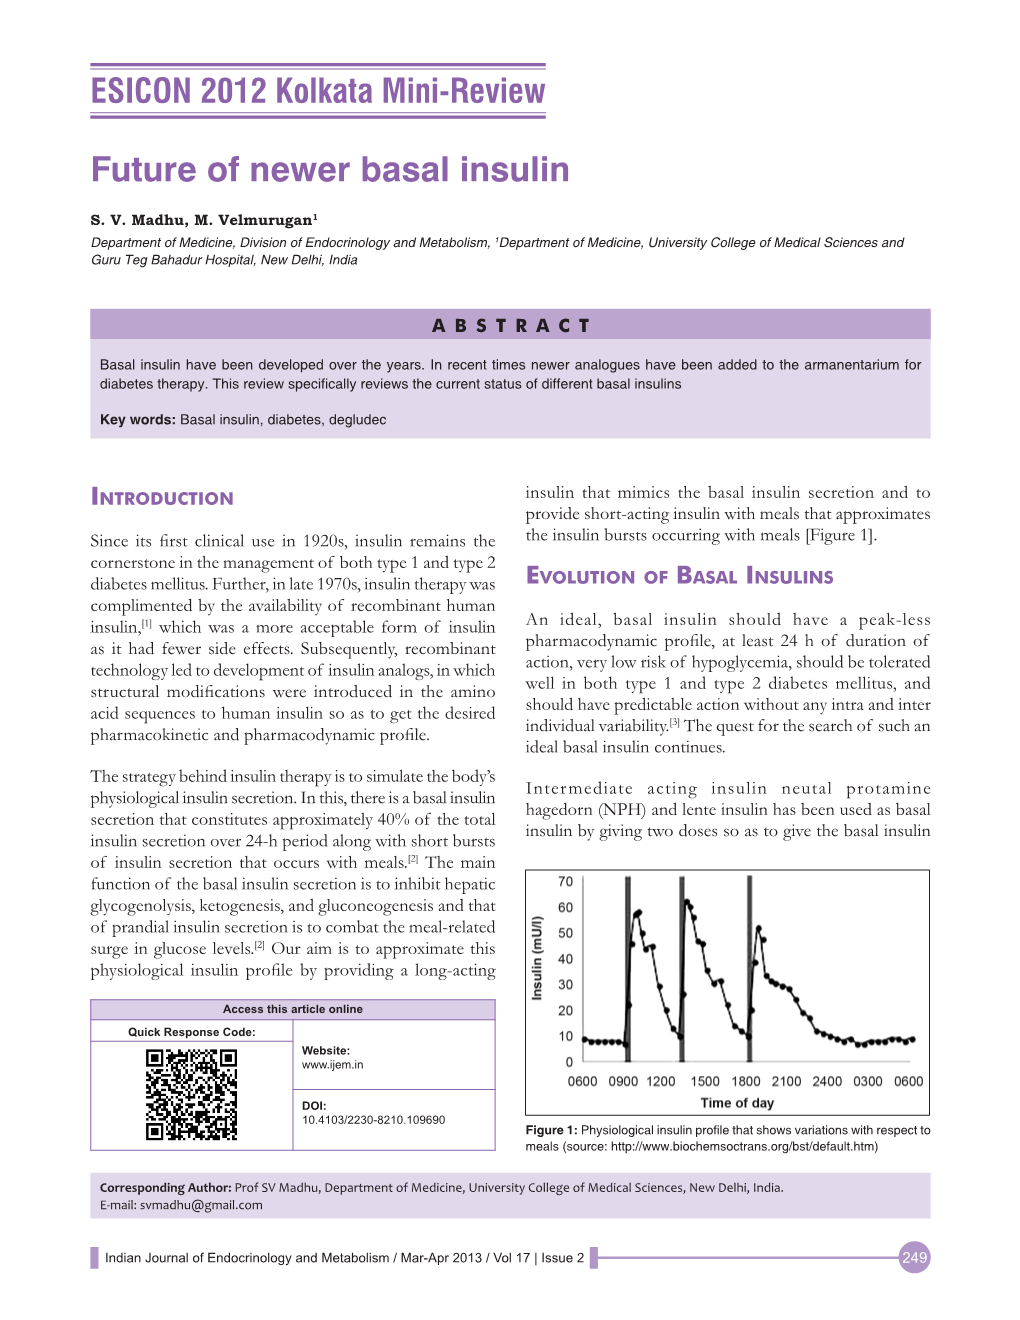 Future of Newer Basal Insulin